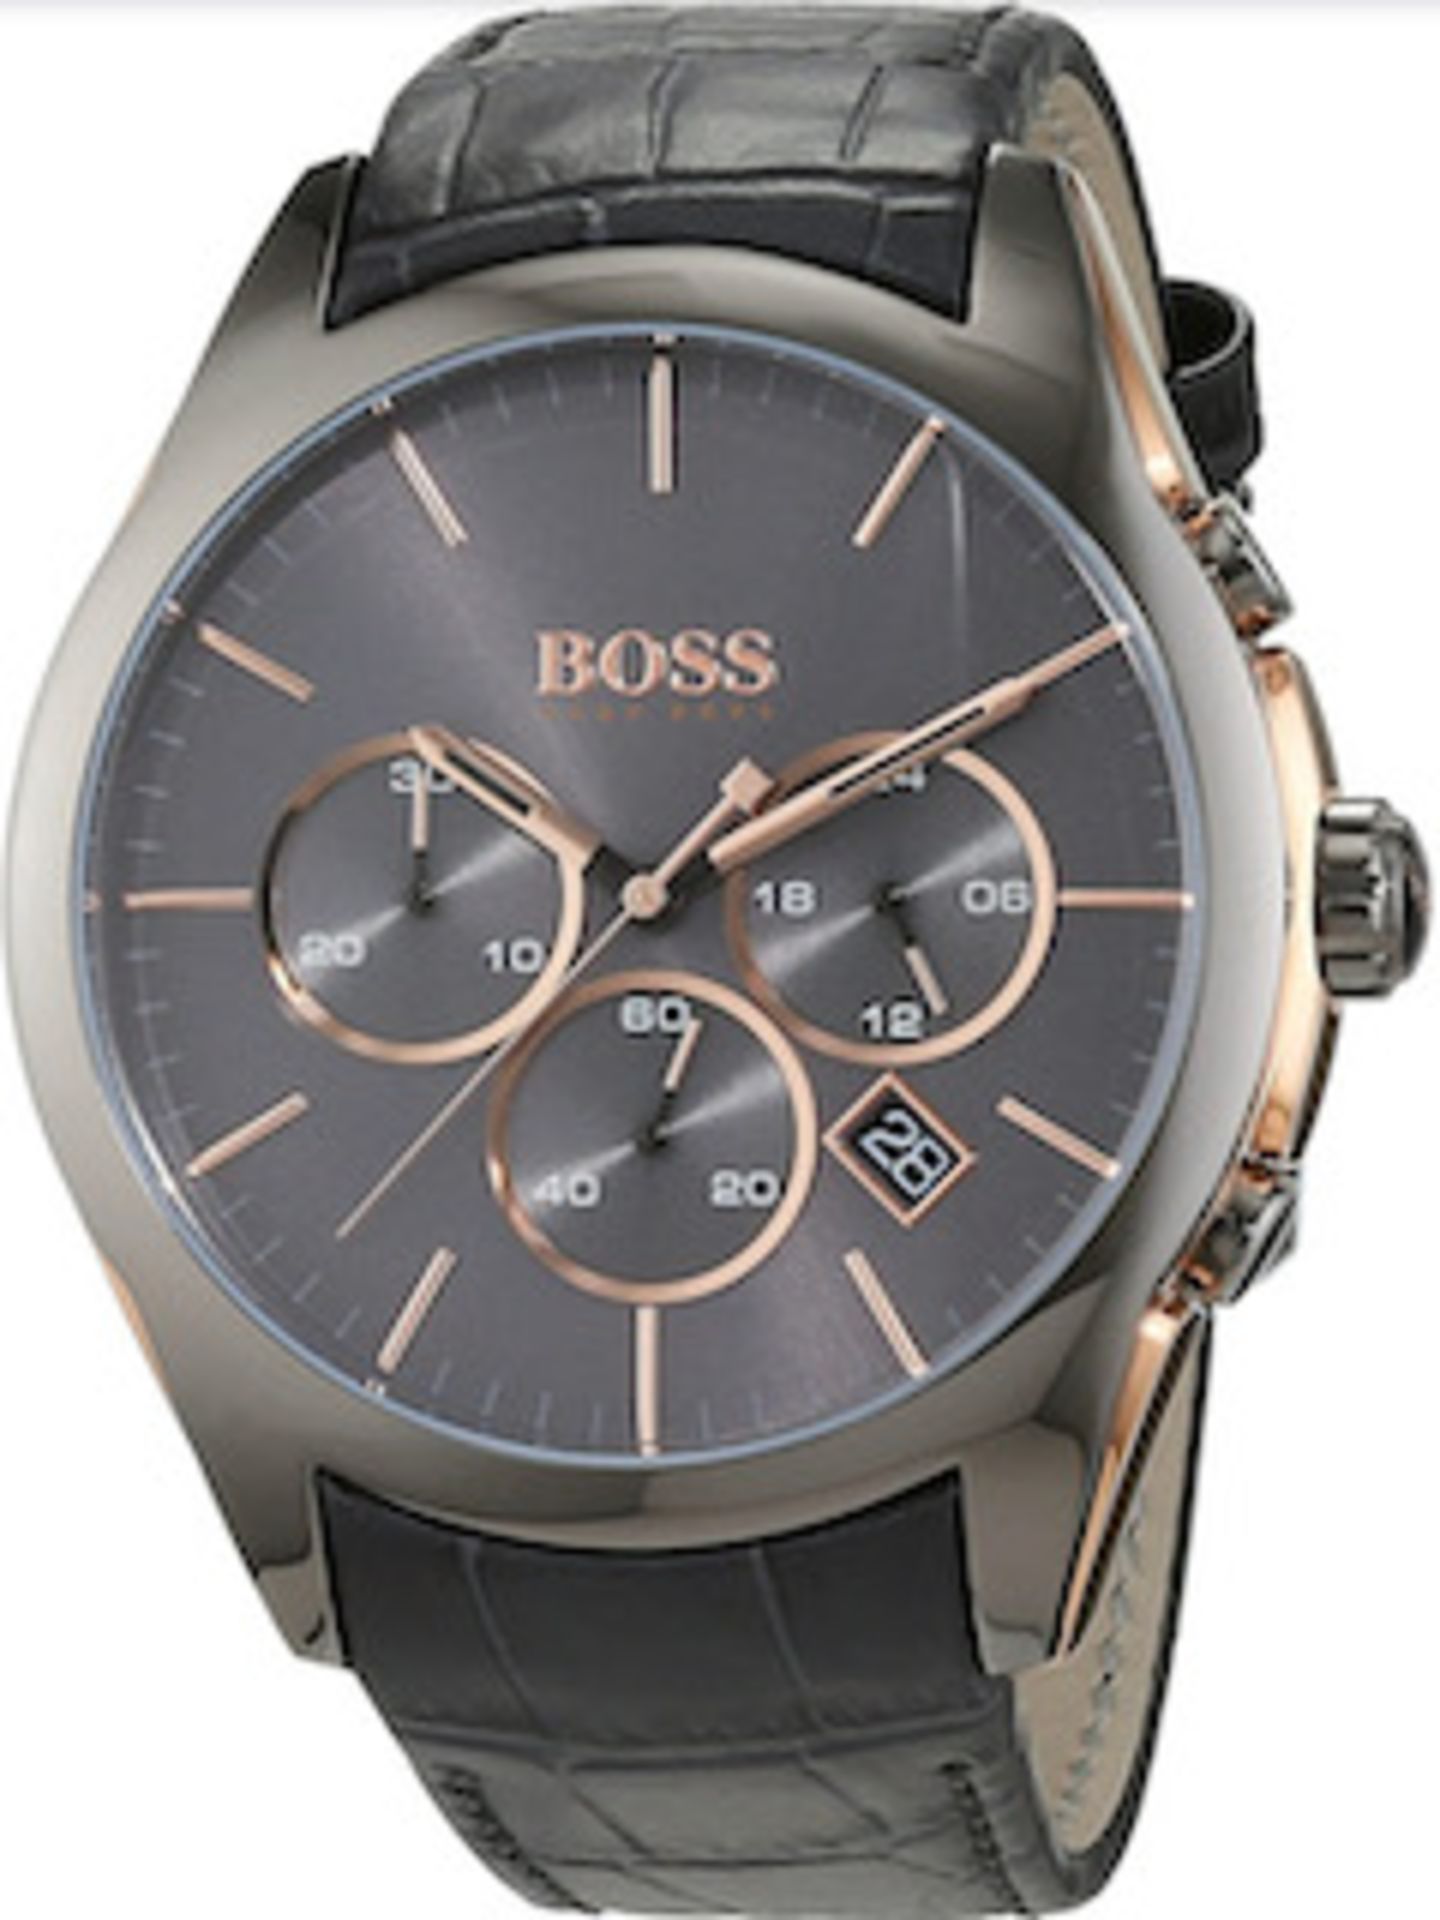 Hugo Boss 1513366 Men's Onyx Grey Leather Strap Quartz Chronograph Watch - Image 2 of 4